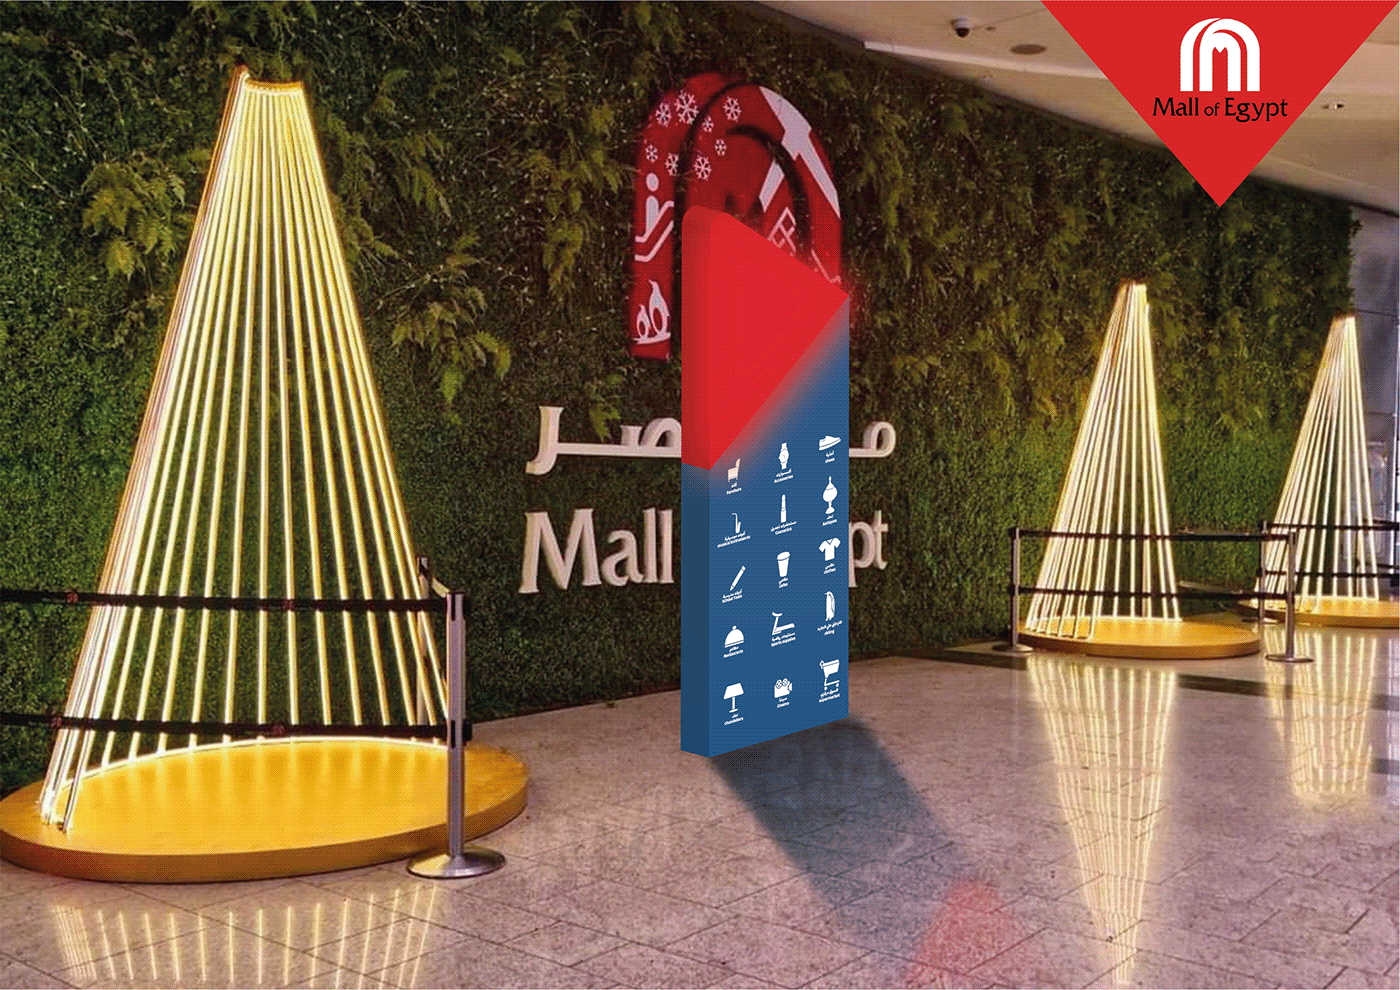 art direction  Mall of egypt piktogram piktograms visual identification visual identity sign system design mall